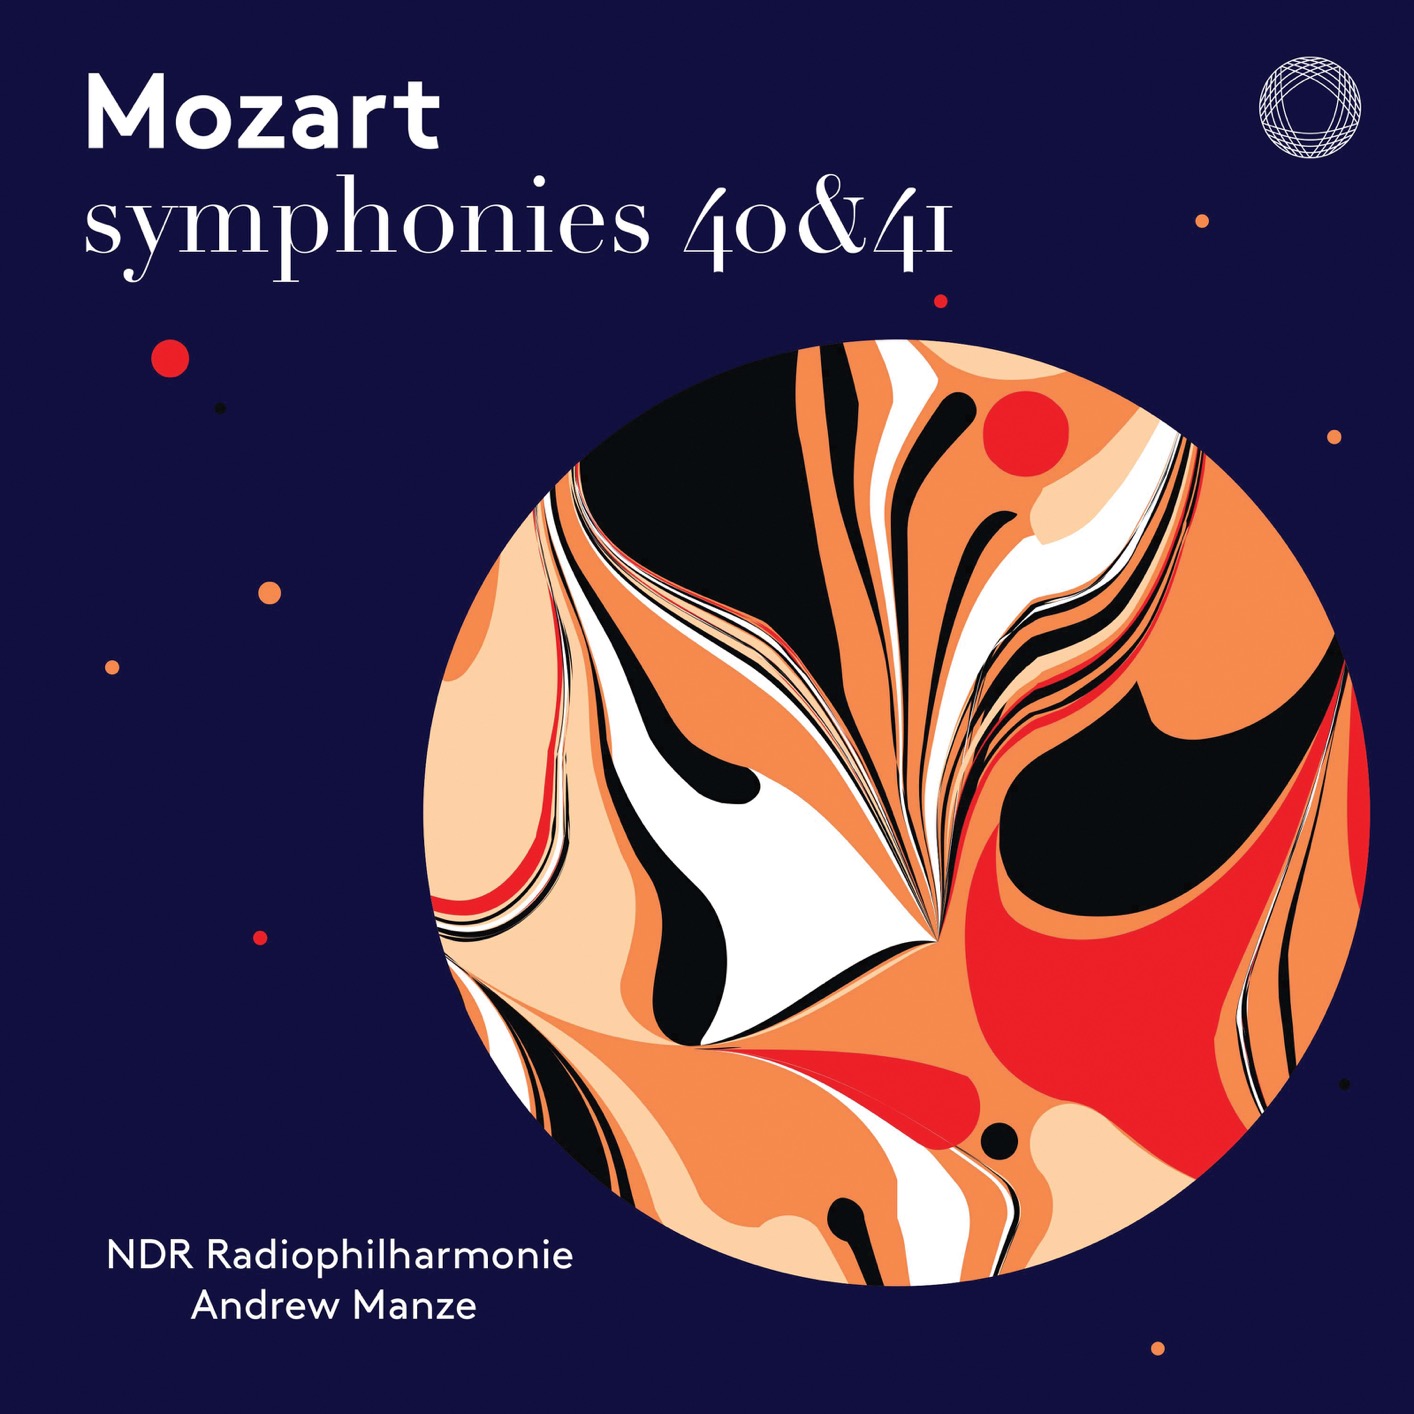 NDR Radiophilharmonie & Andrew Manze - Mozart: Symphonies Nos. 40 & 41 (Live) (2019) [FLAC 24bit/48kHz]